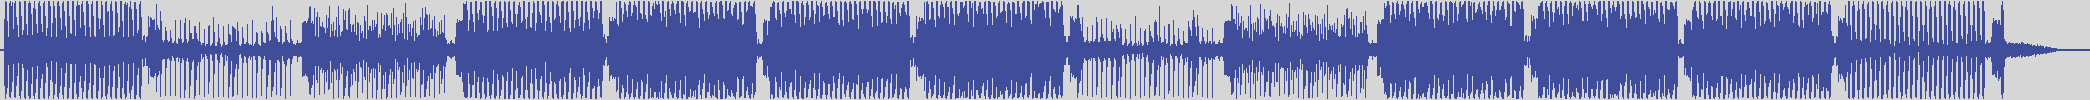 nf_boyz_records [NFY048] Plastic Jam - Inner Energy [Train Mix] audio wave form